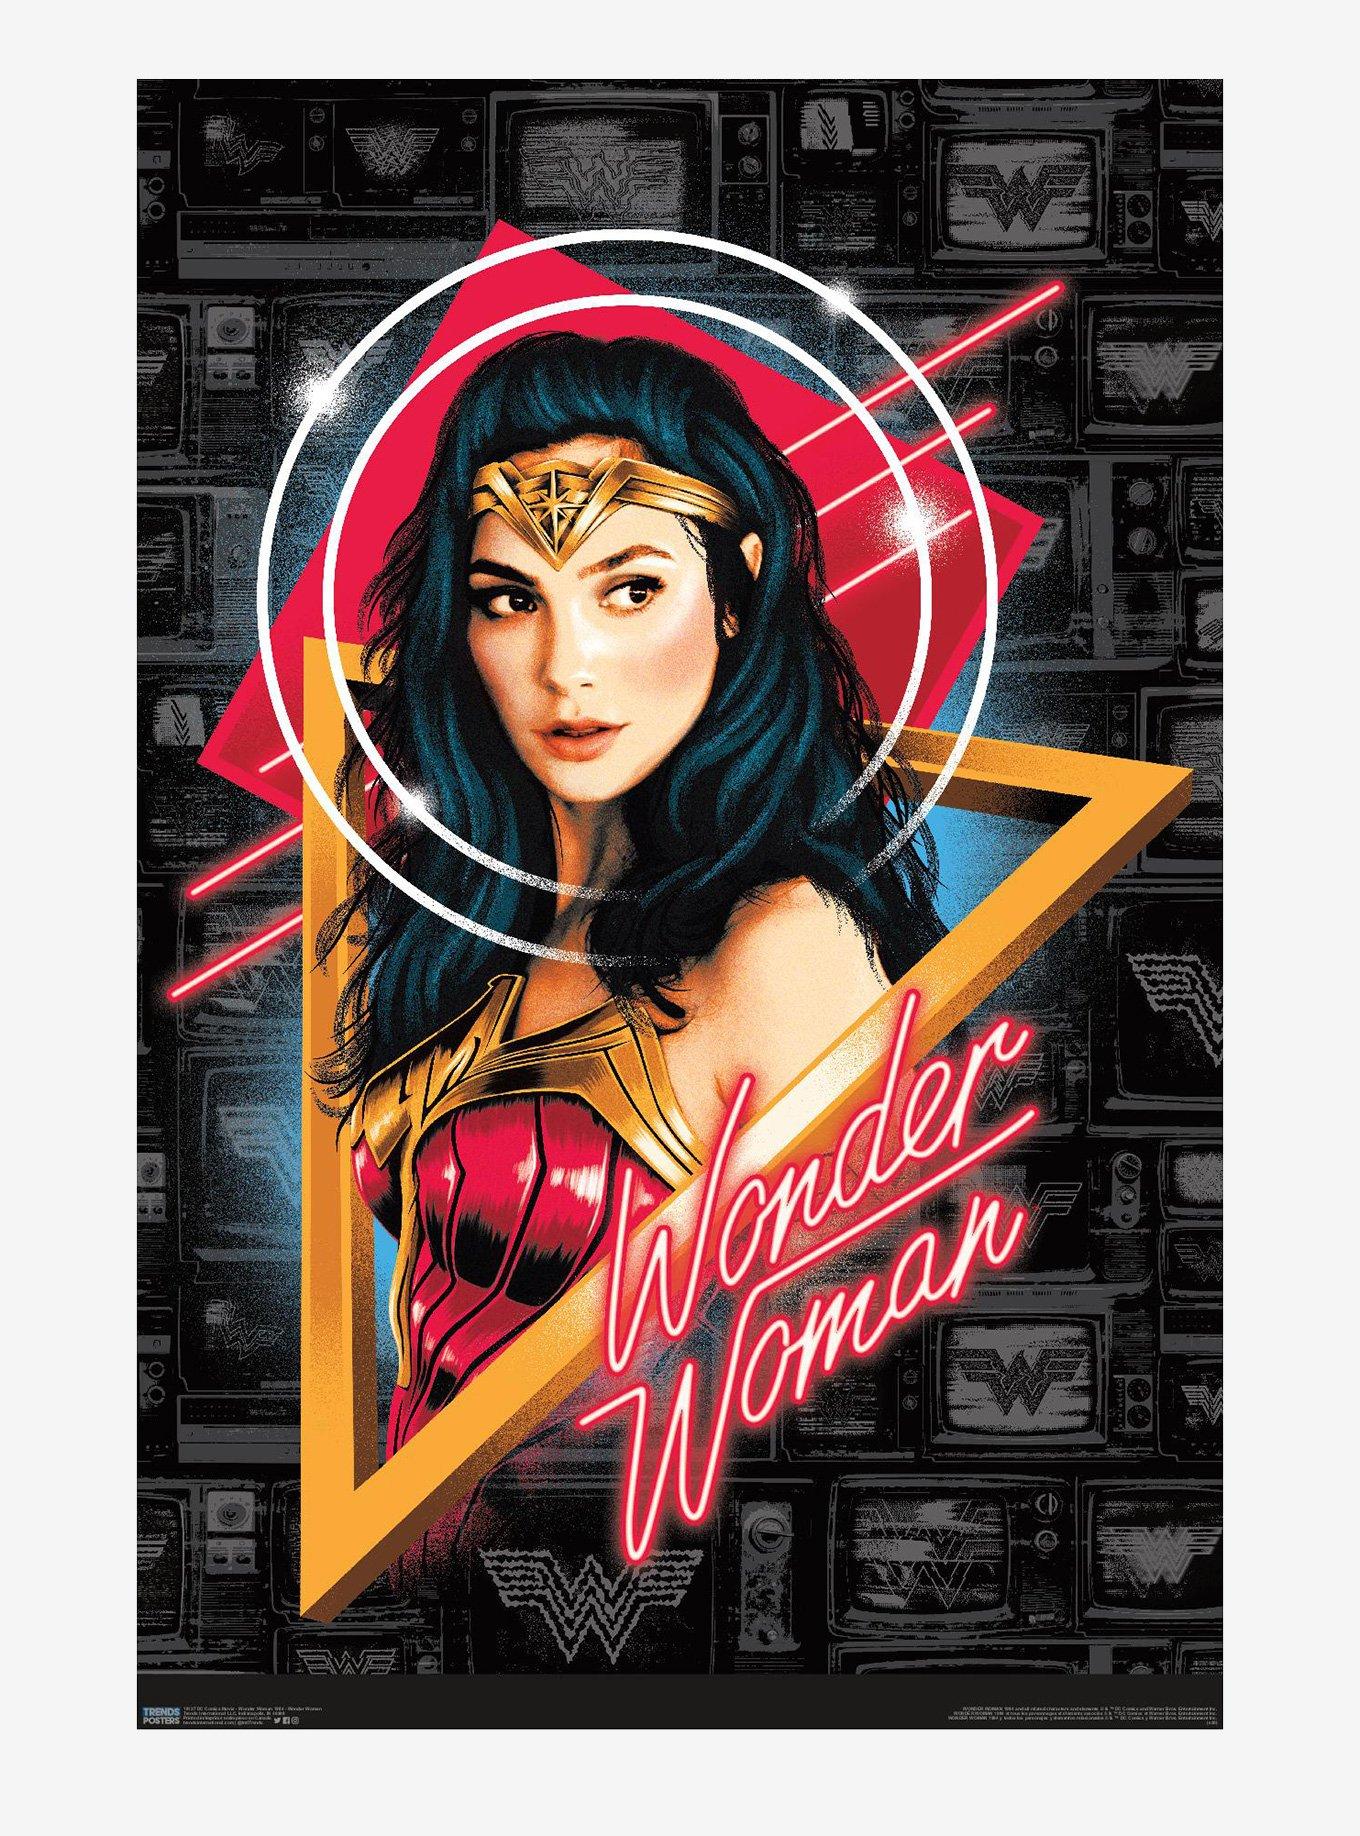 DC Comics Wonder Woman 1984 Retro Pop Art Hoodie